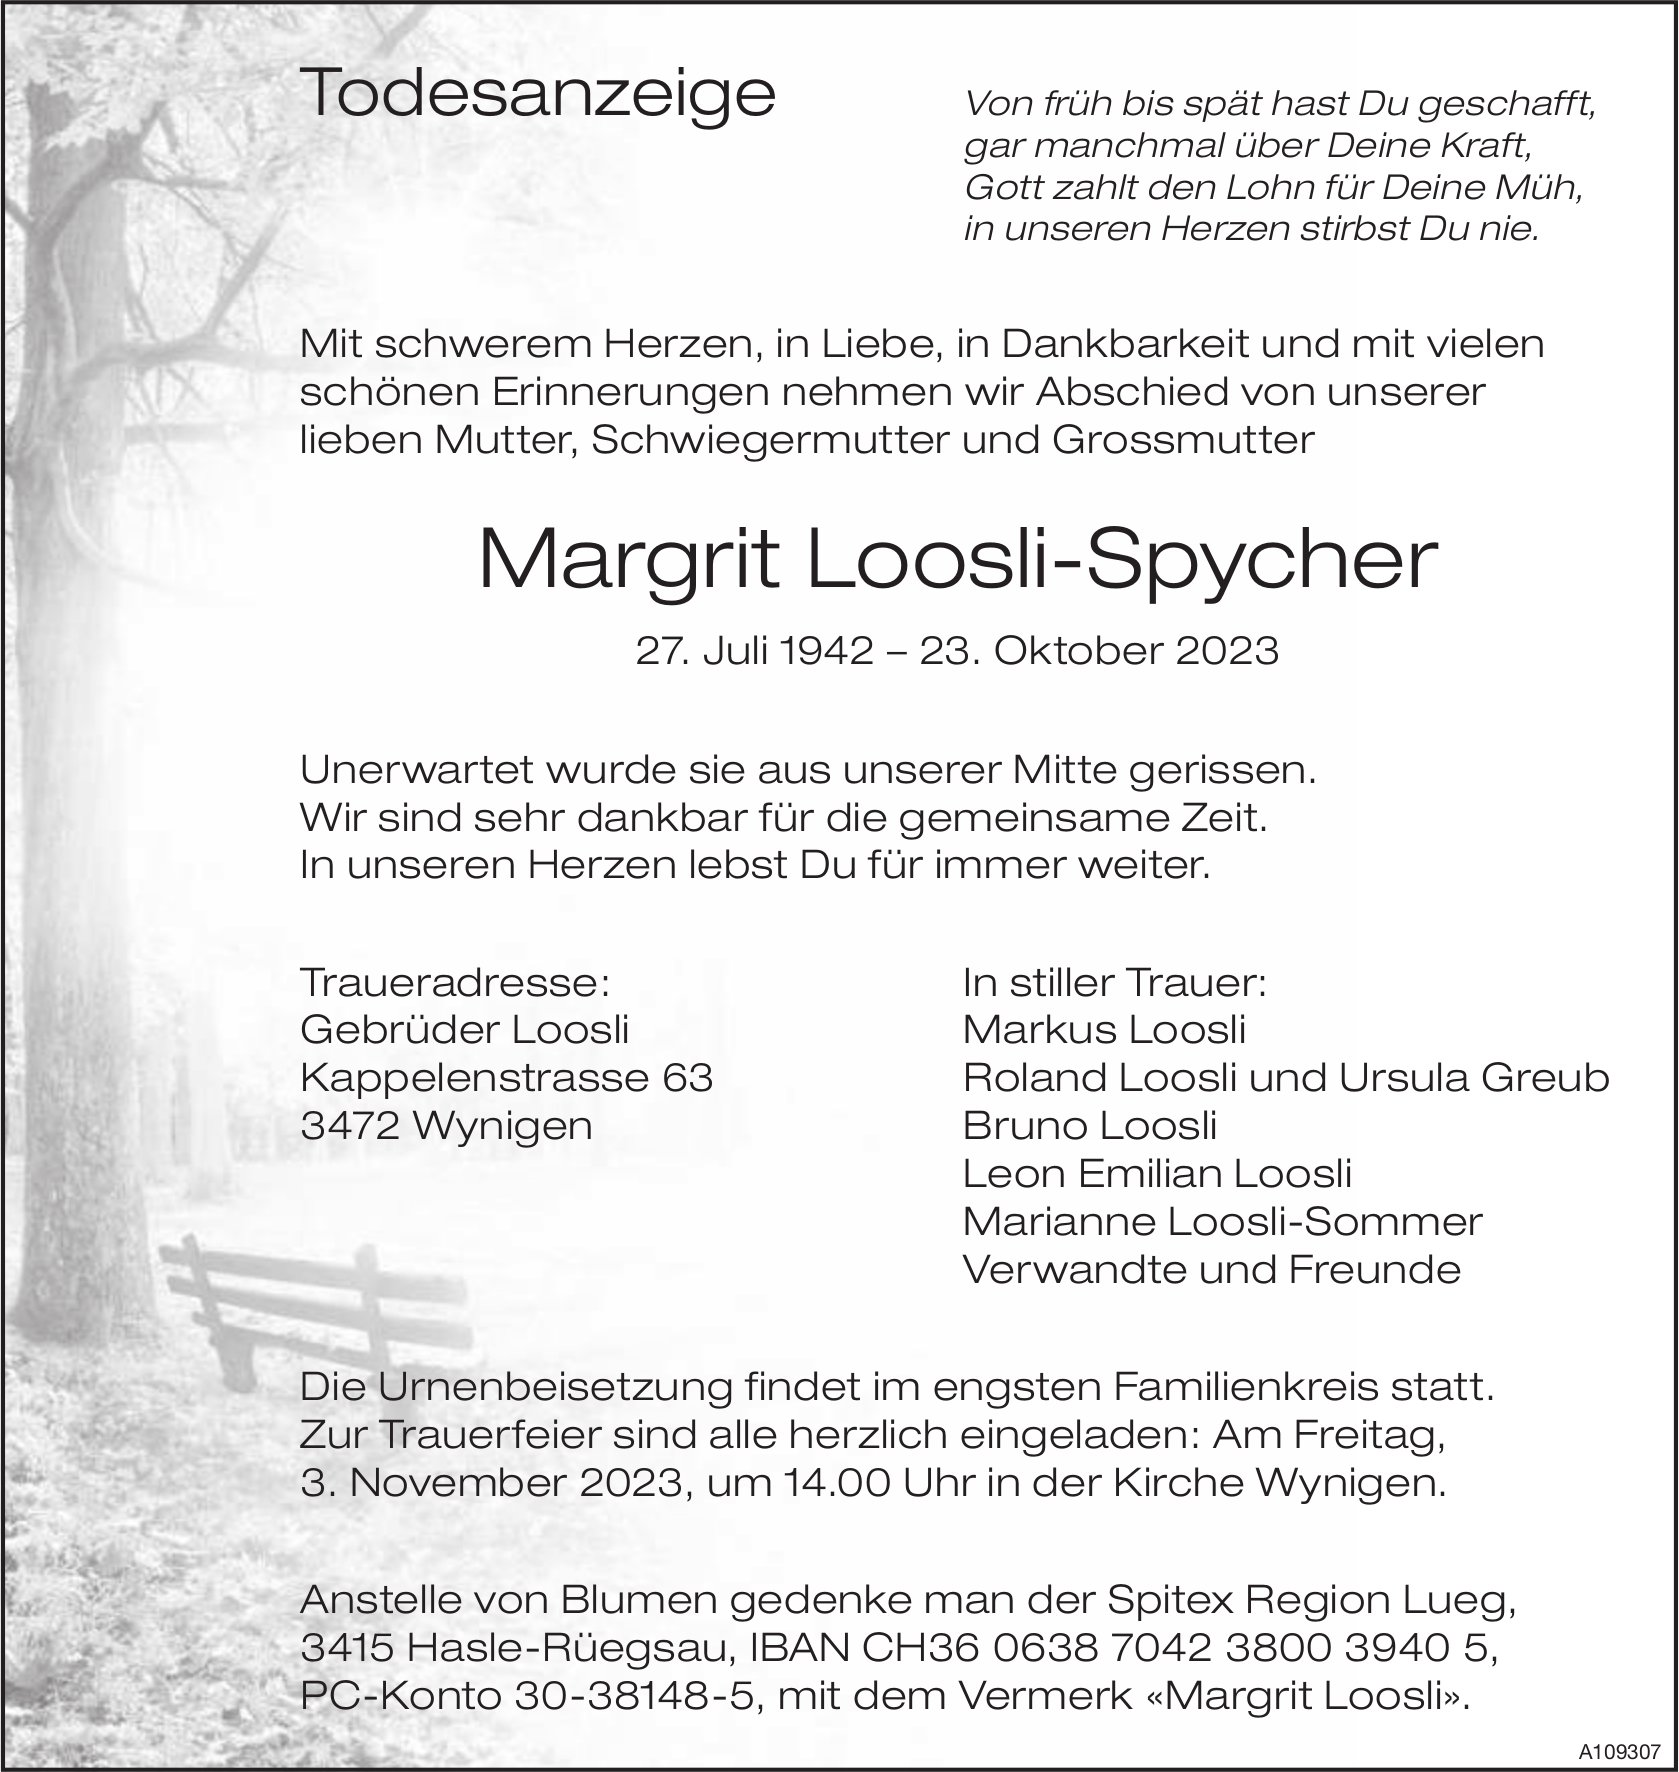 Margrit Loosli-Spycher, Oktober 2023 / TA